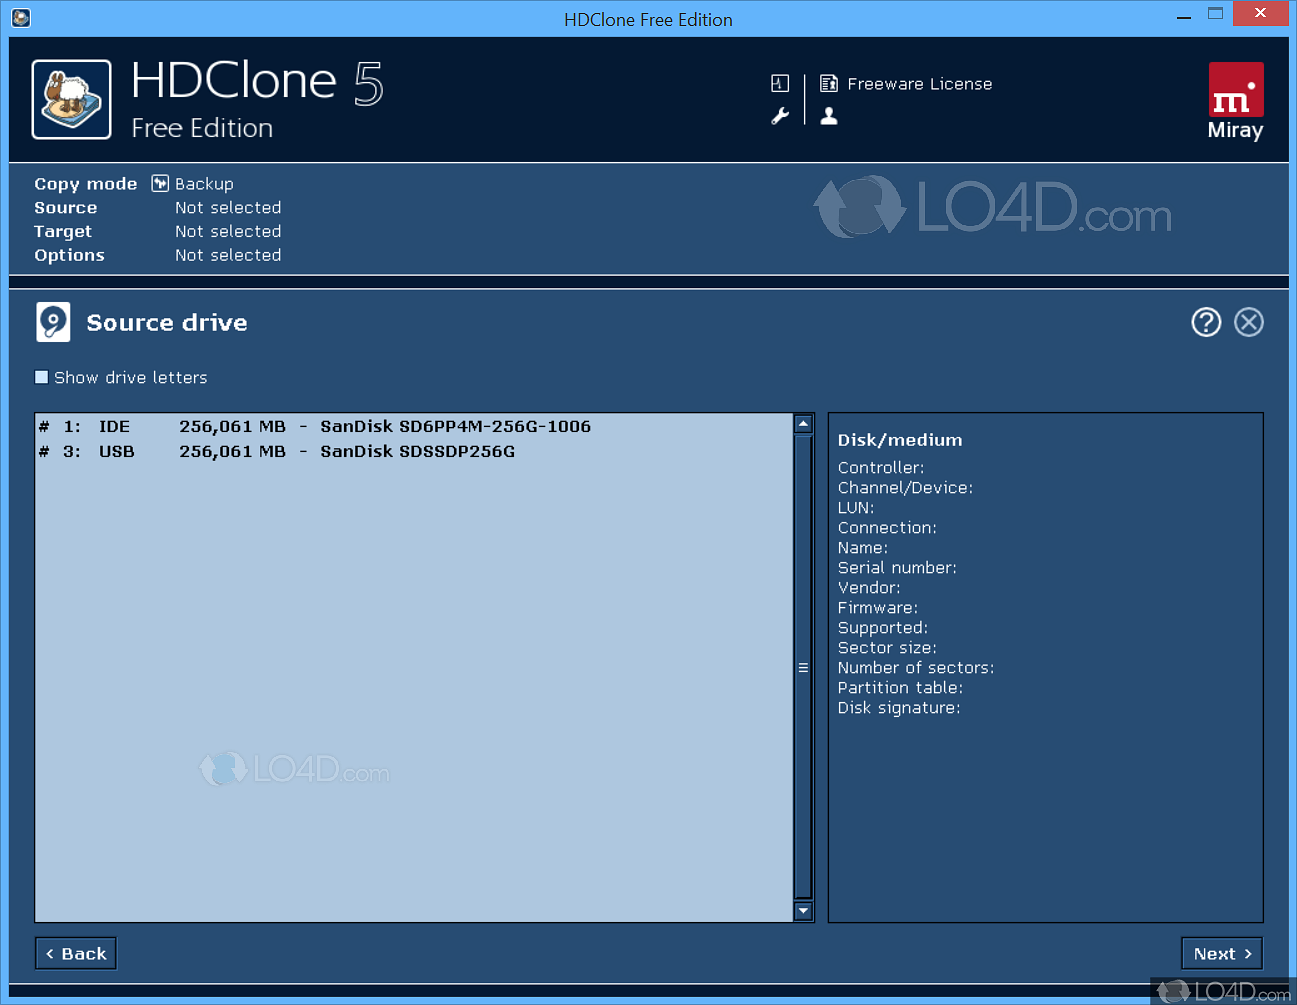 hdclone 4.2 professional edition